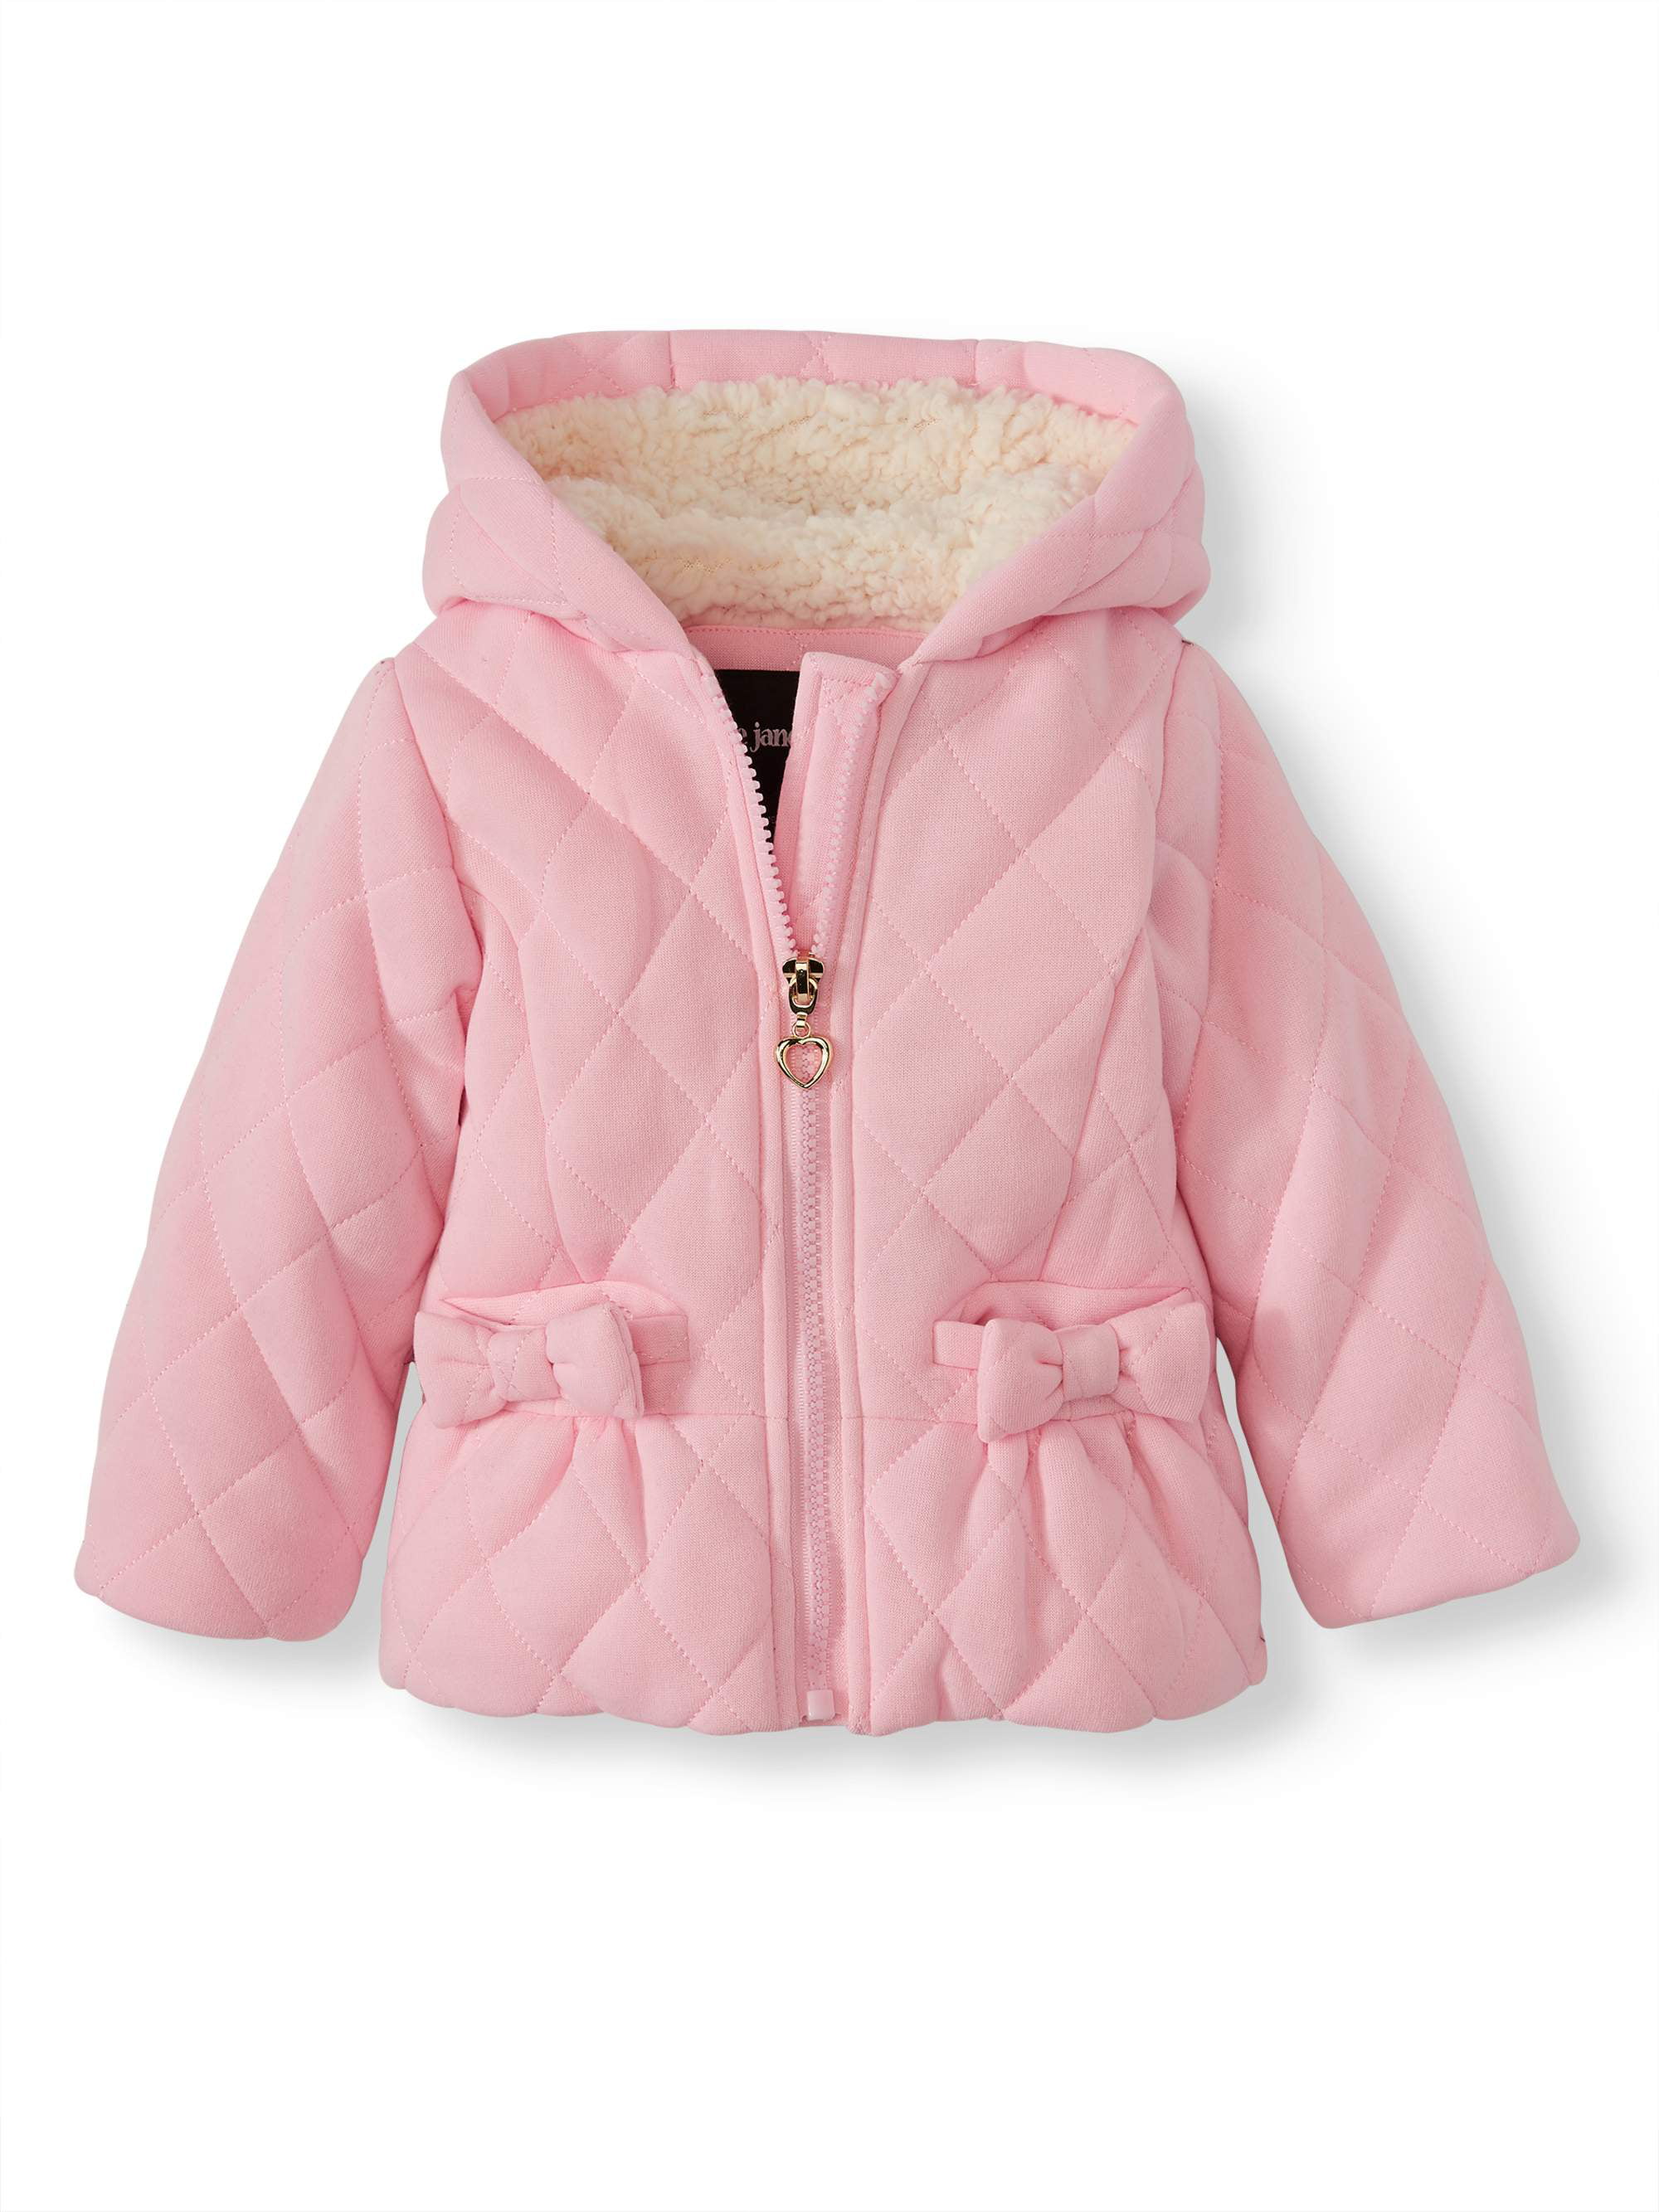 Bhip Clothing - BHIP Baby Toddler Girl Quilted Peplum Winter Jacket ...